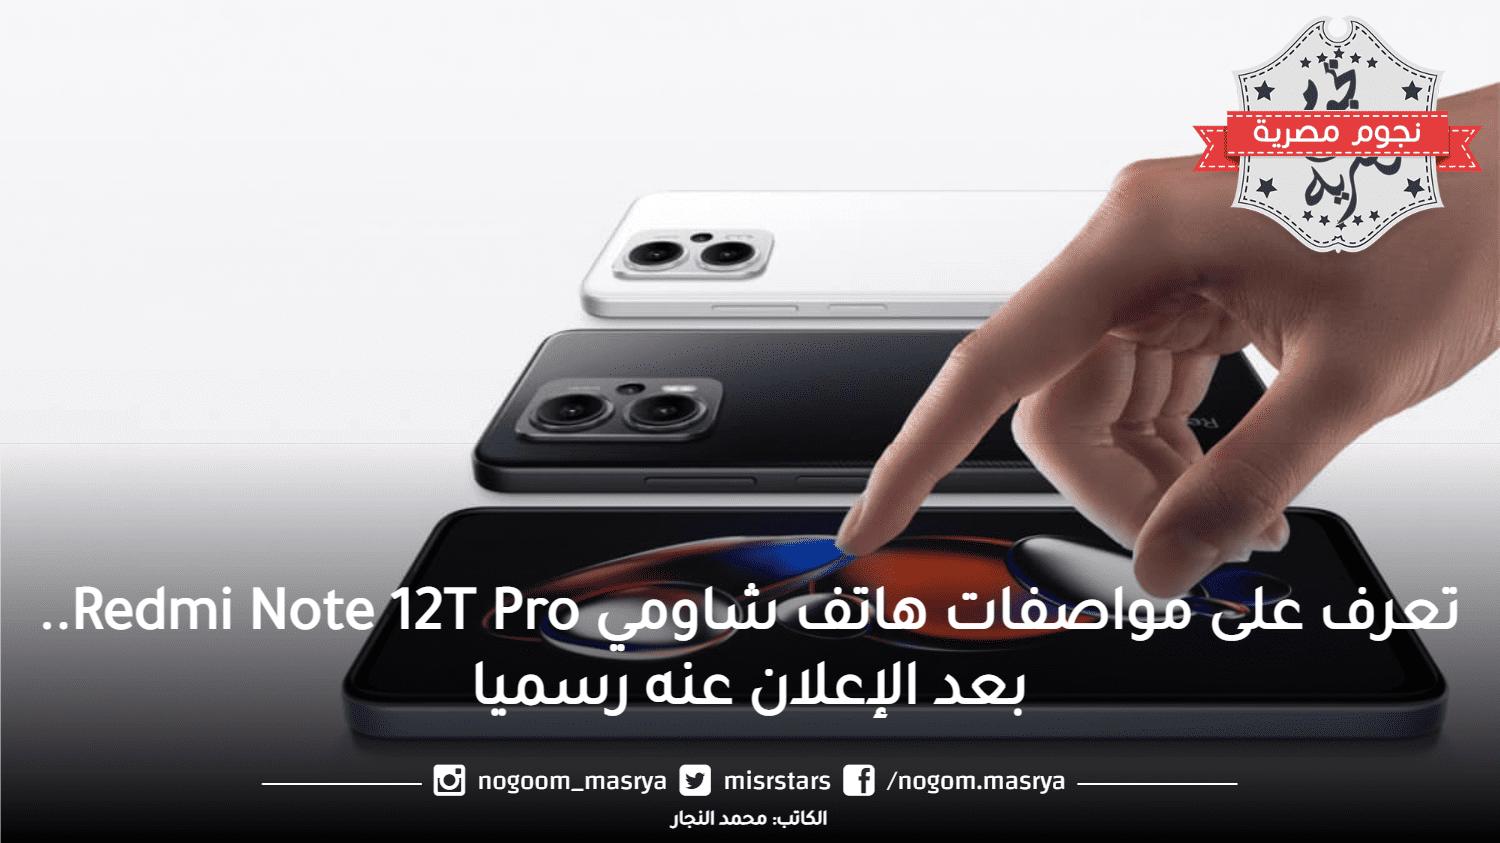 تعرف على مواصفات هاتف شاومي Redmi Note 12T Pro.. بعد الإعلان عنه رسميا